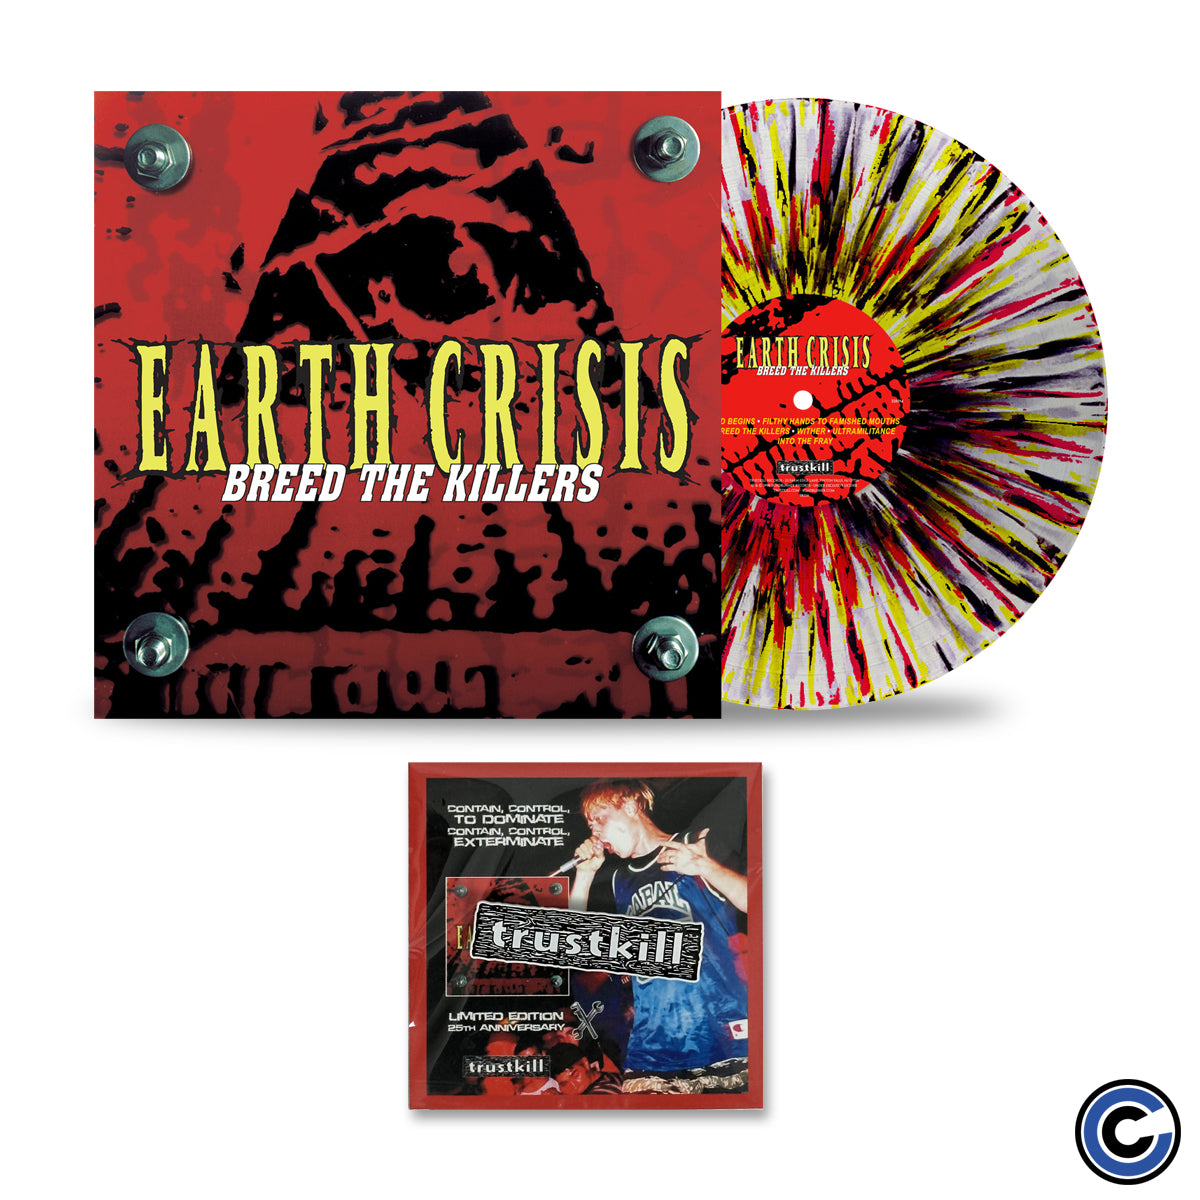 Earth Crisis "Breed The Killers" 12" Vinyl